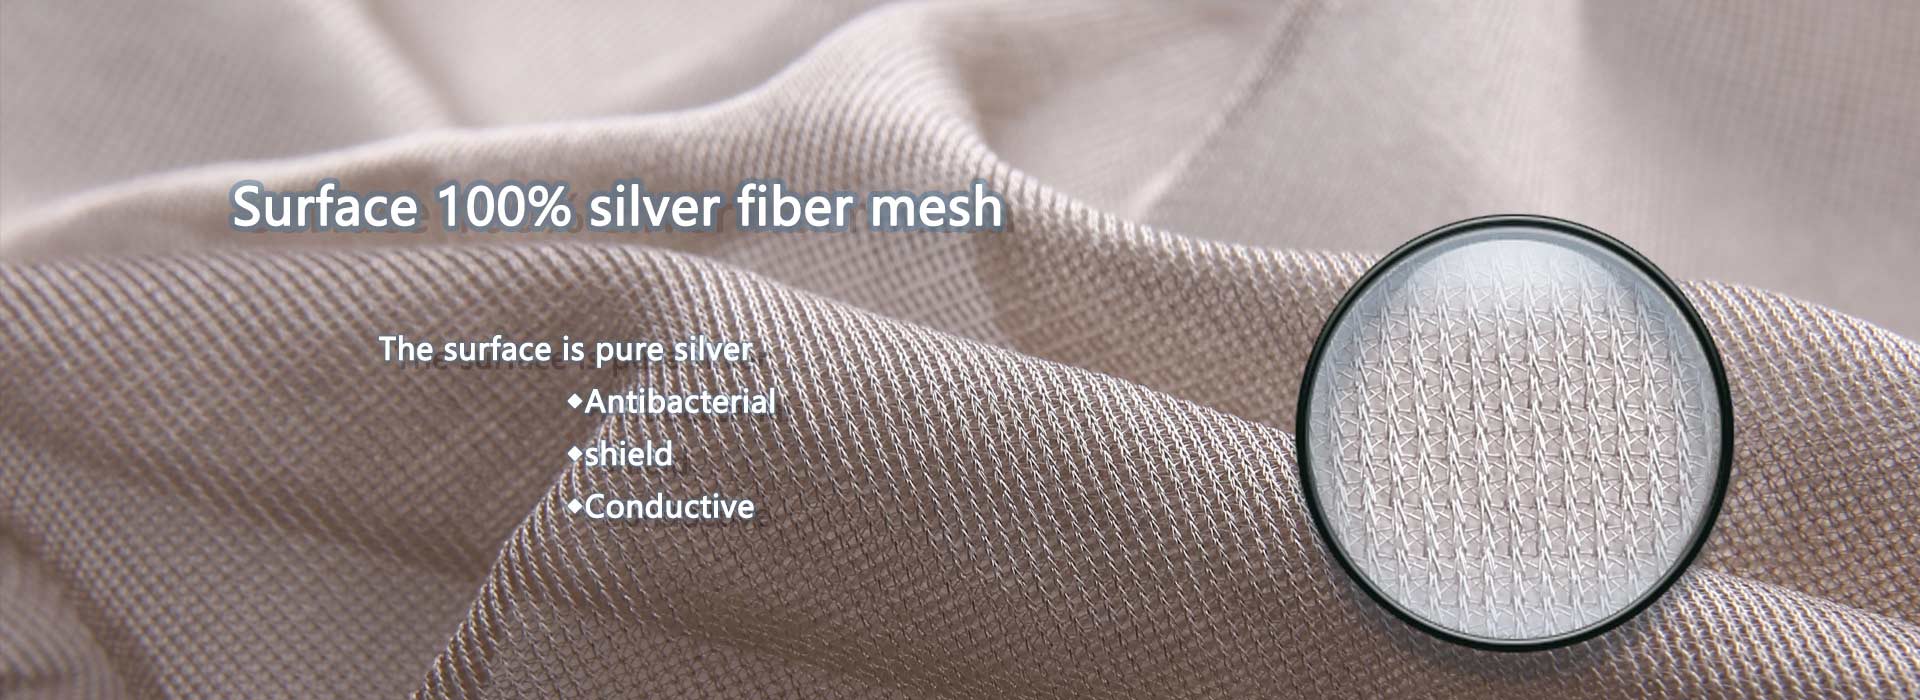 Surface 100% silver fiber mesh